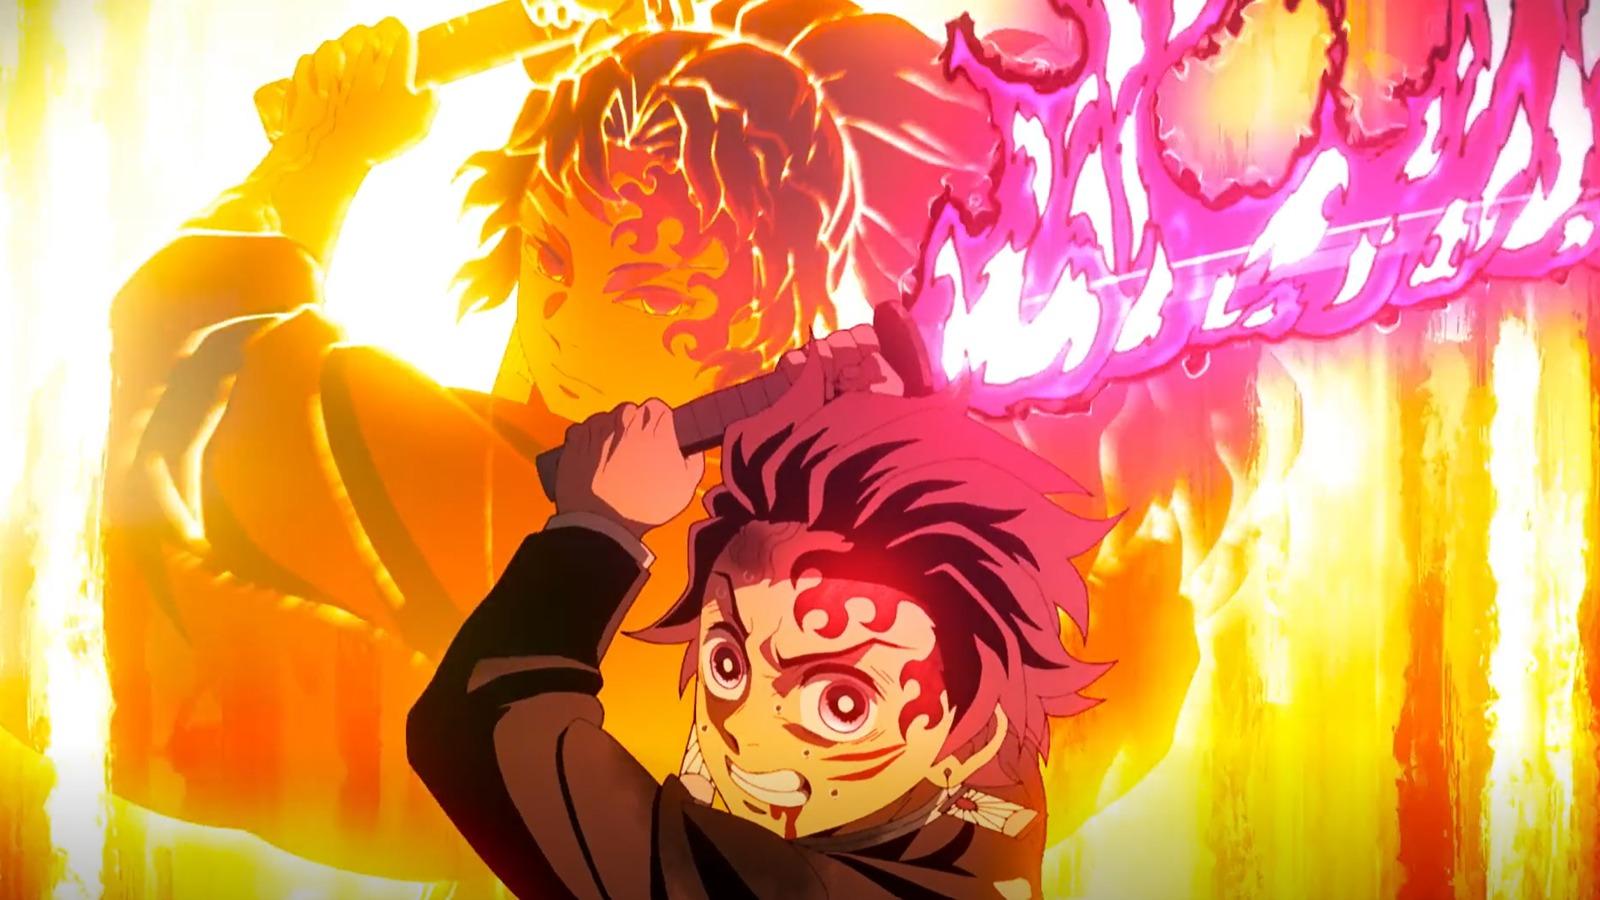 An image of Tanjiro using the same ability as Yoriichi in Demon Slayer